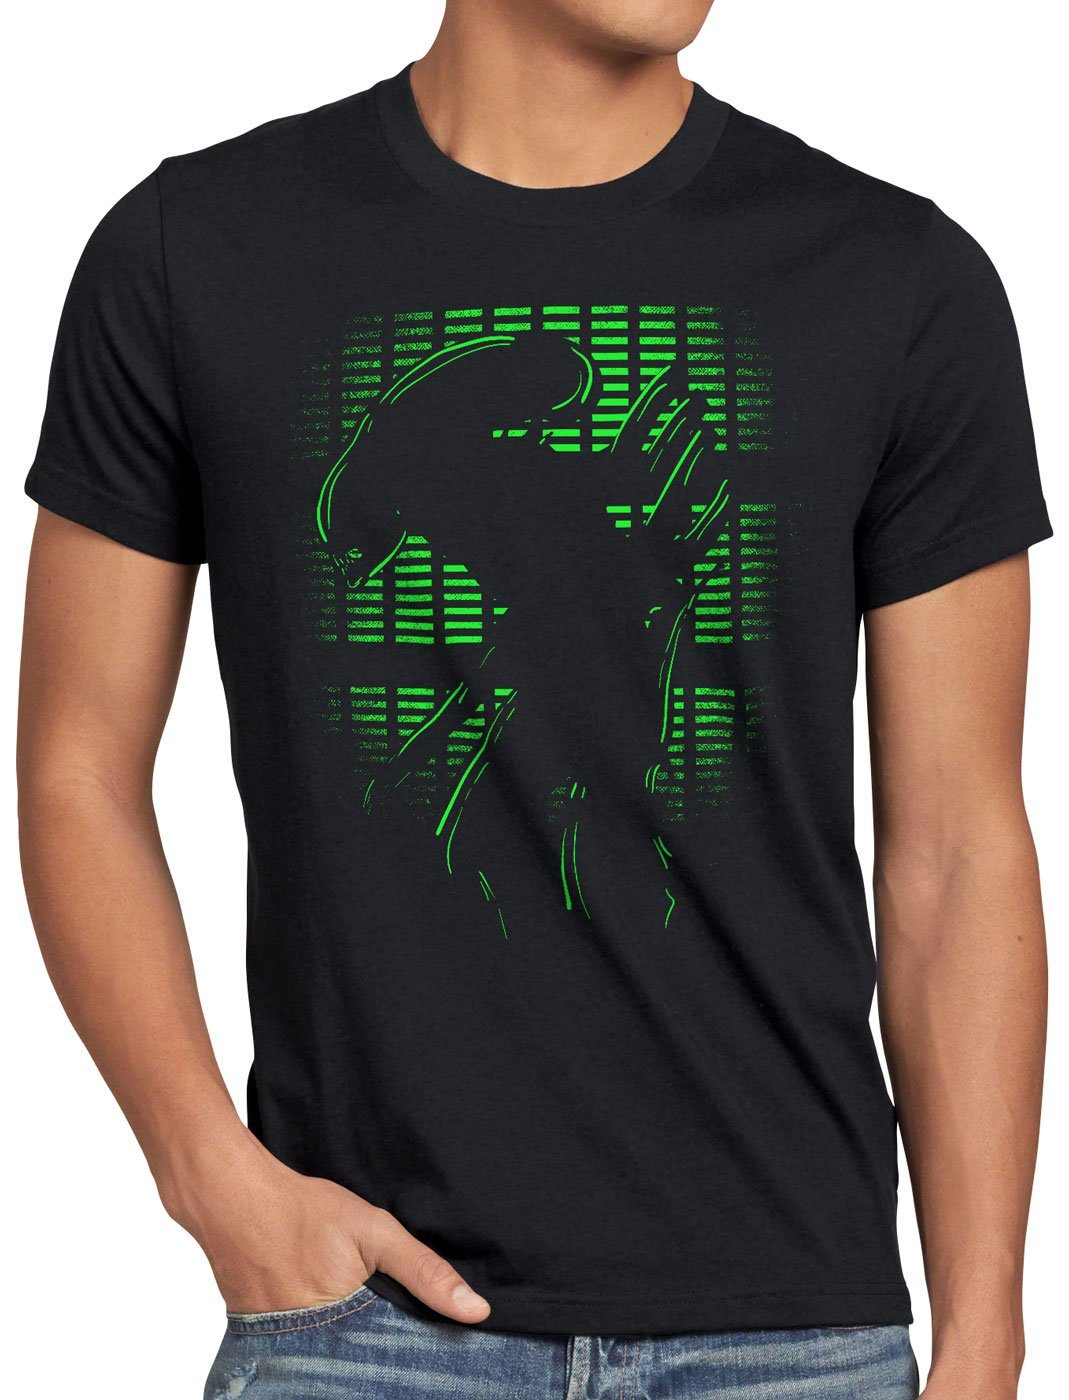 style3 Print-Shirt Alien Zwielicht ripley xenomorph T-Shirt Herren